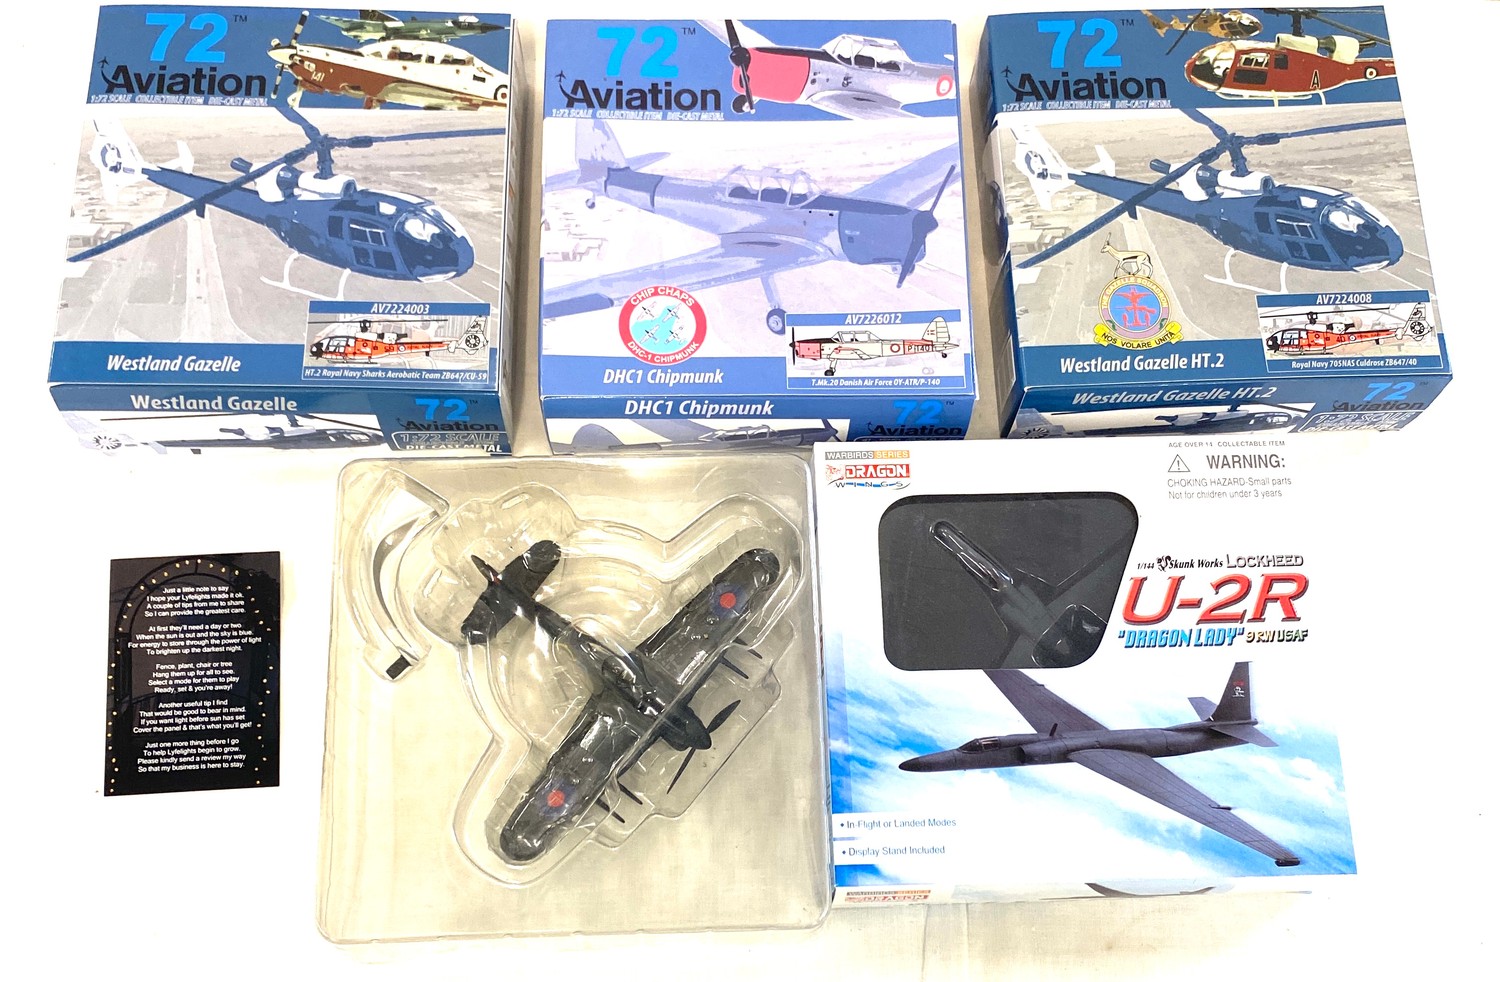 Selection of 3 "72 aviation" boxed models includes, westland gazelle, Westland Gazelle HT.2, Dhc1